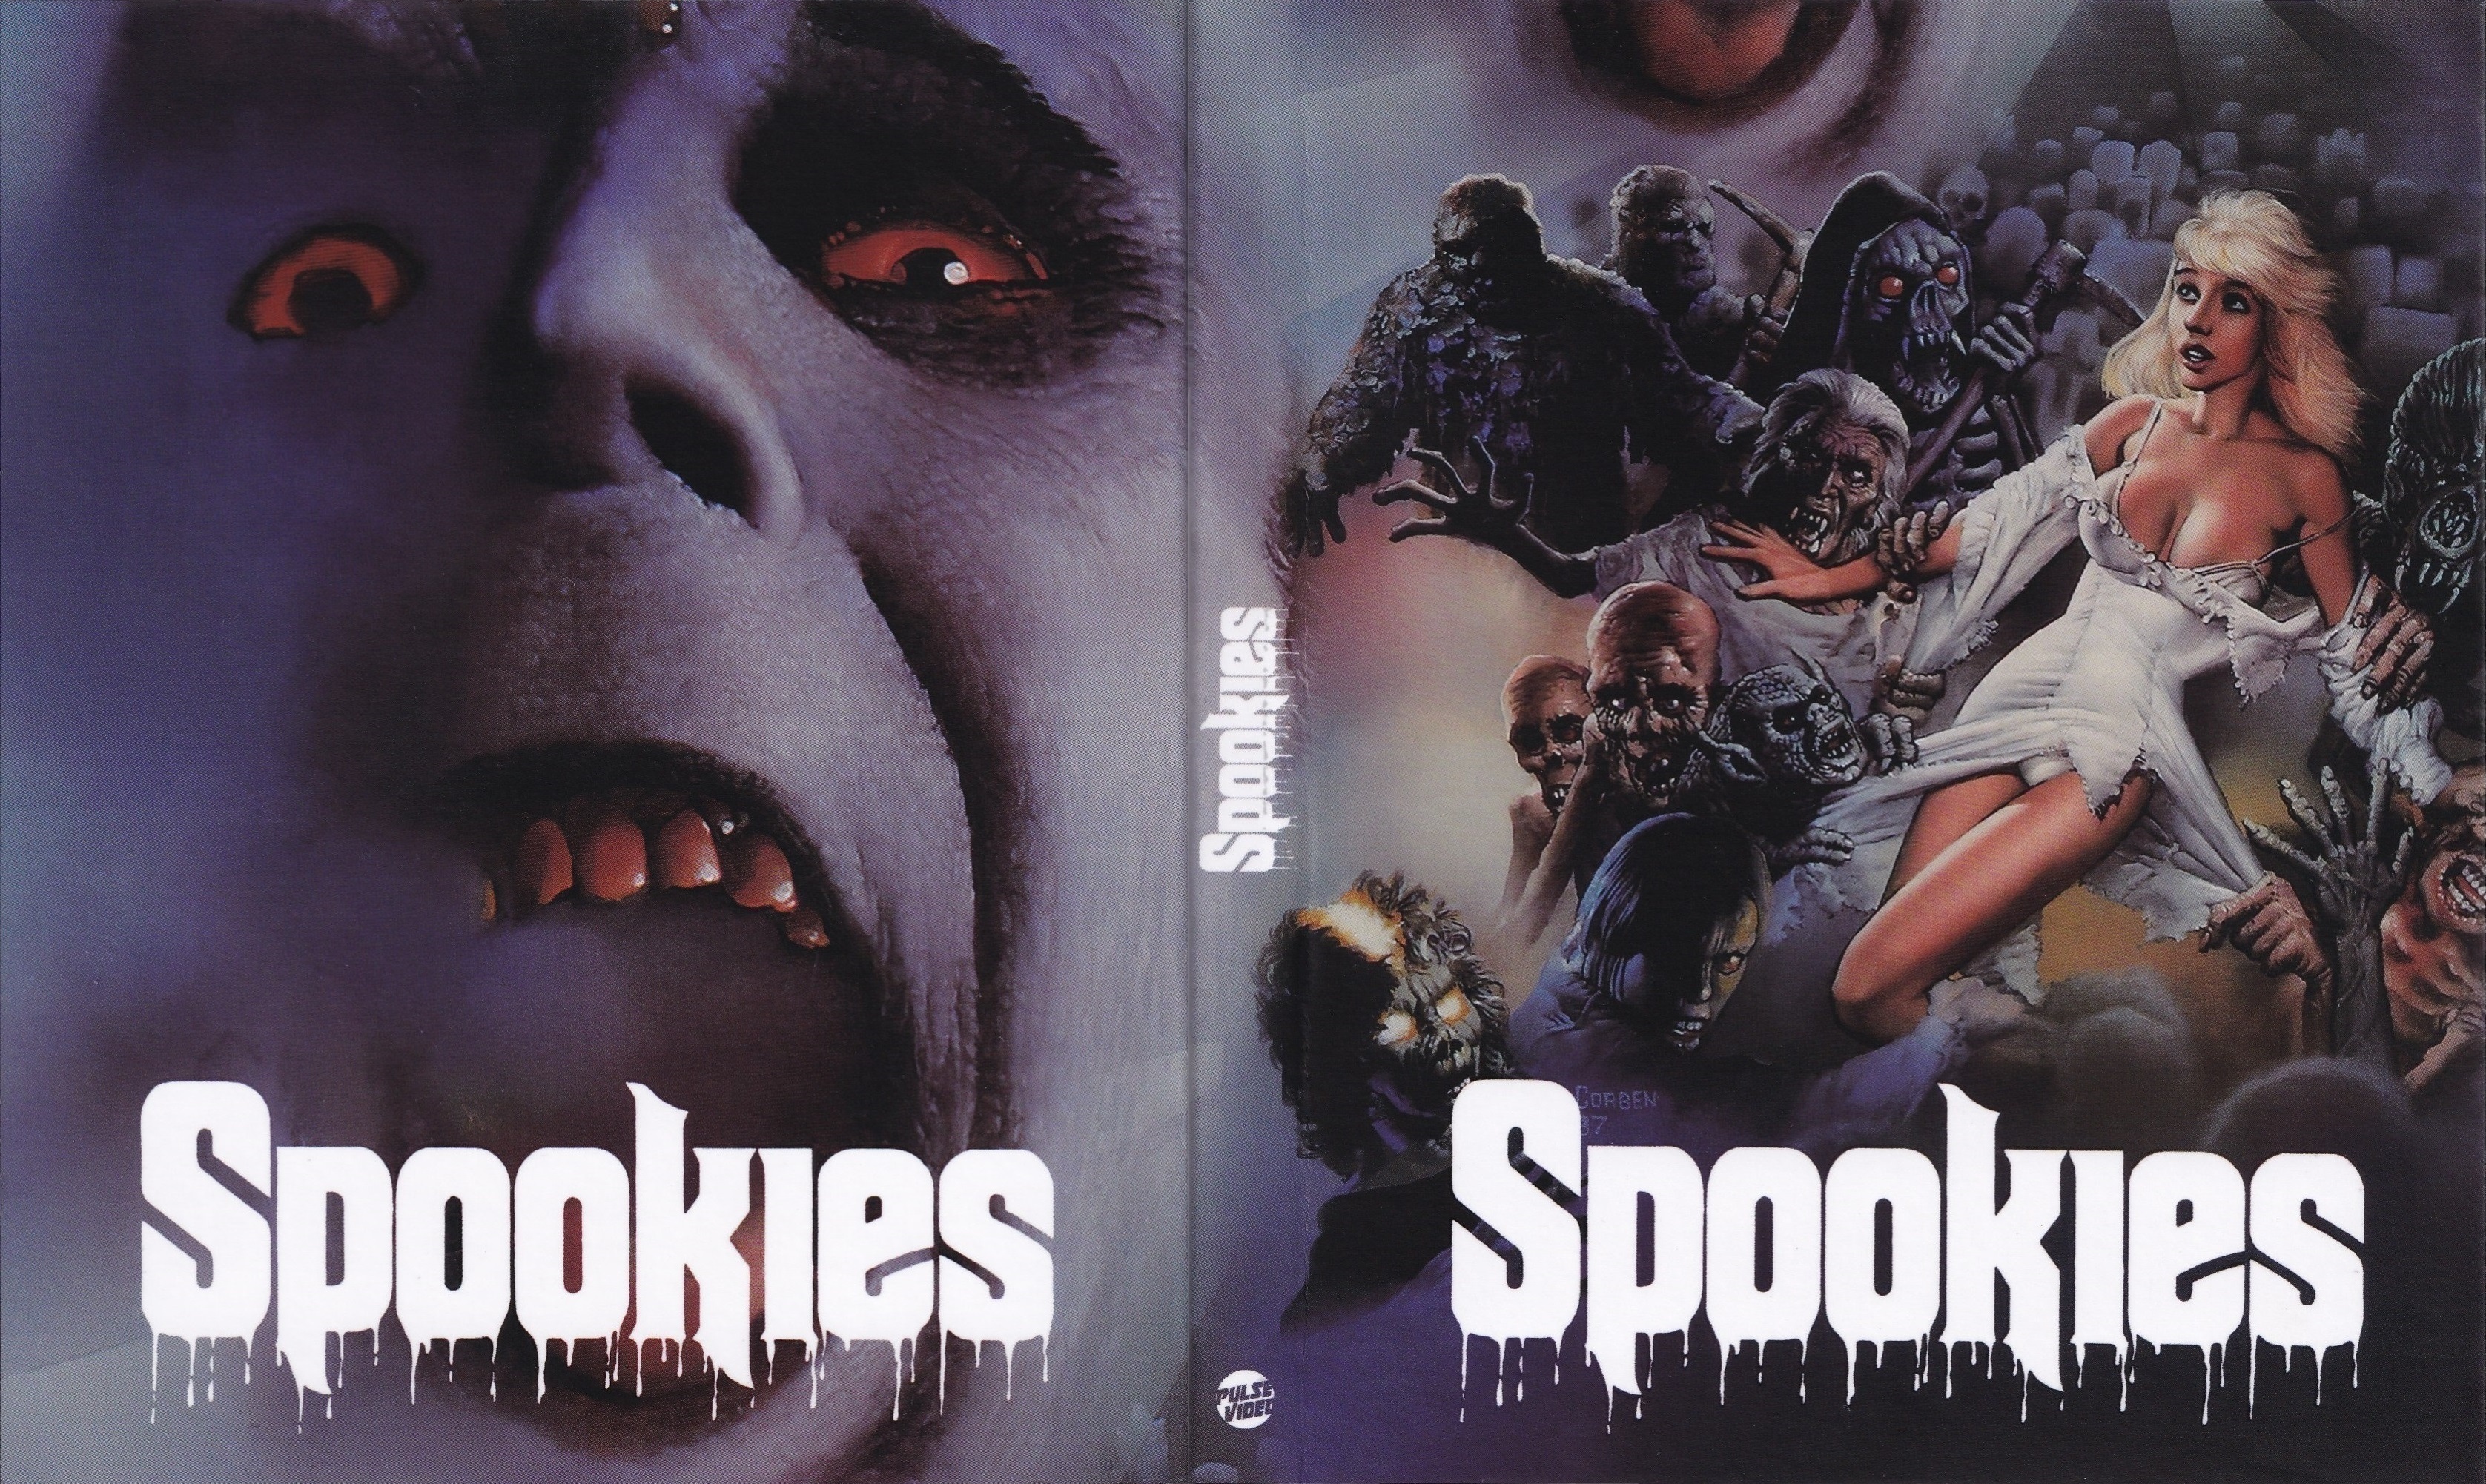 Jaquette DVD Spookies (BLU-RAY) v4